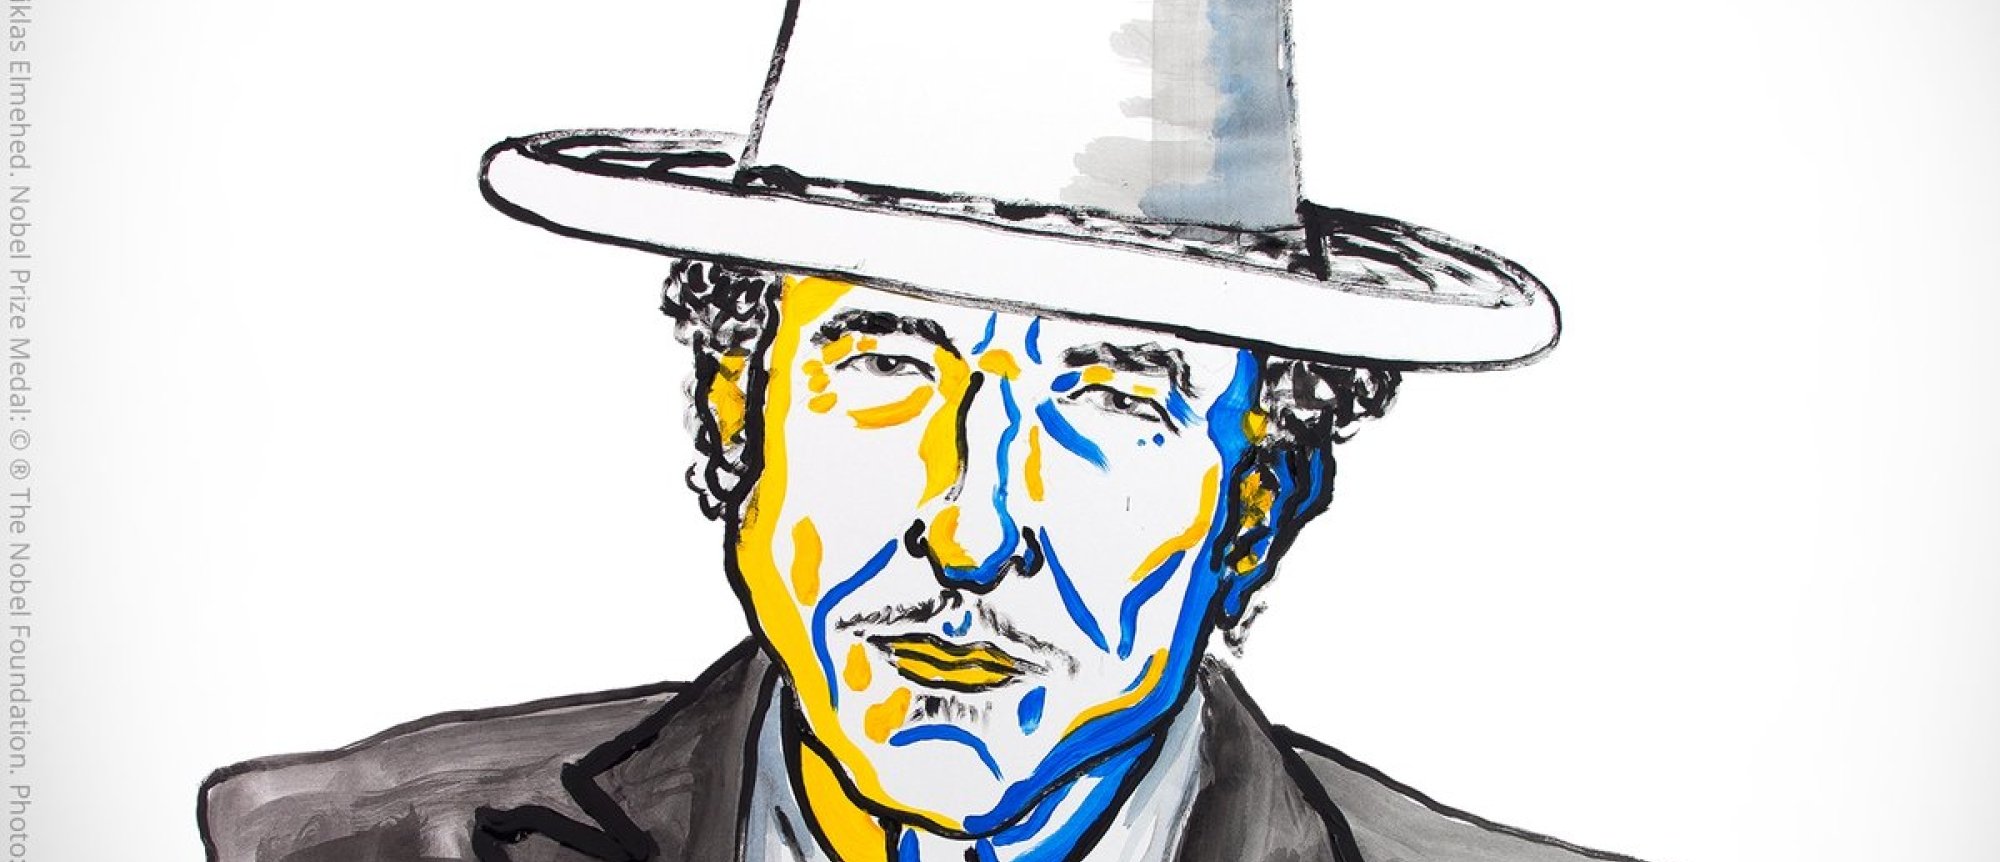 Bob Dylan wint Nobelprijs Literatuur